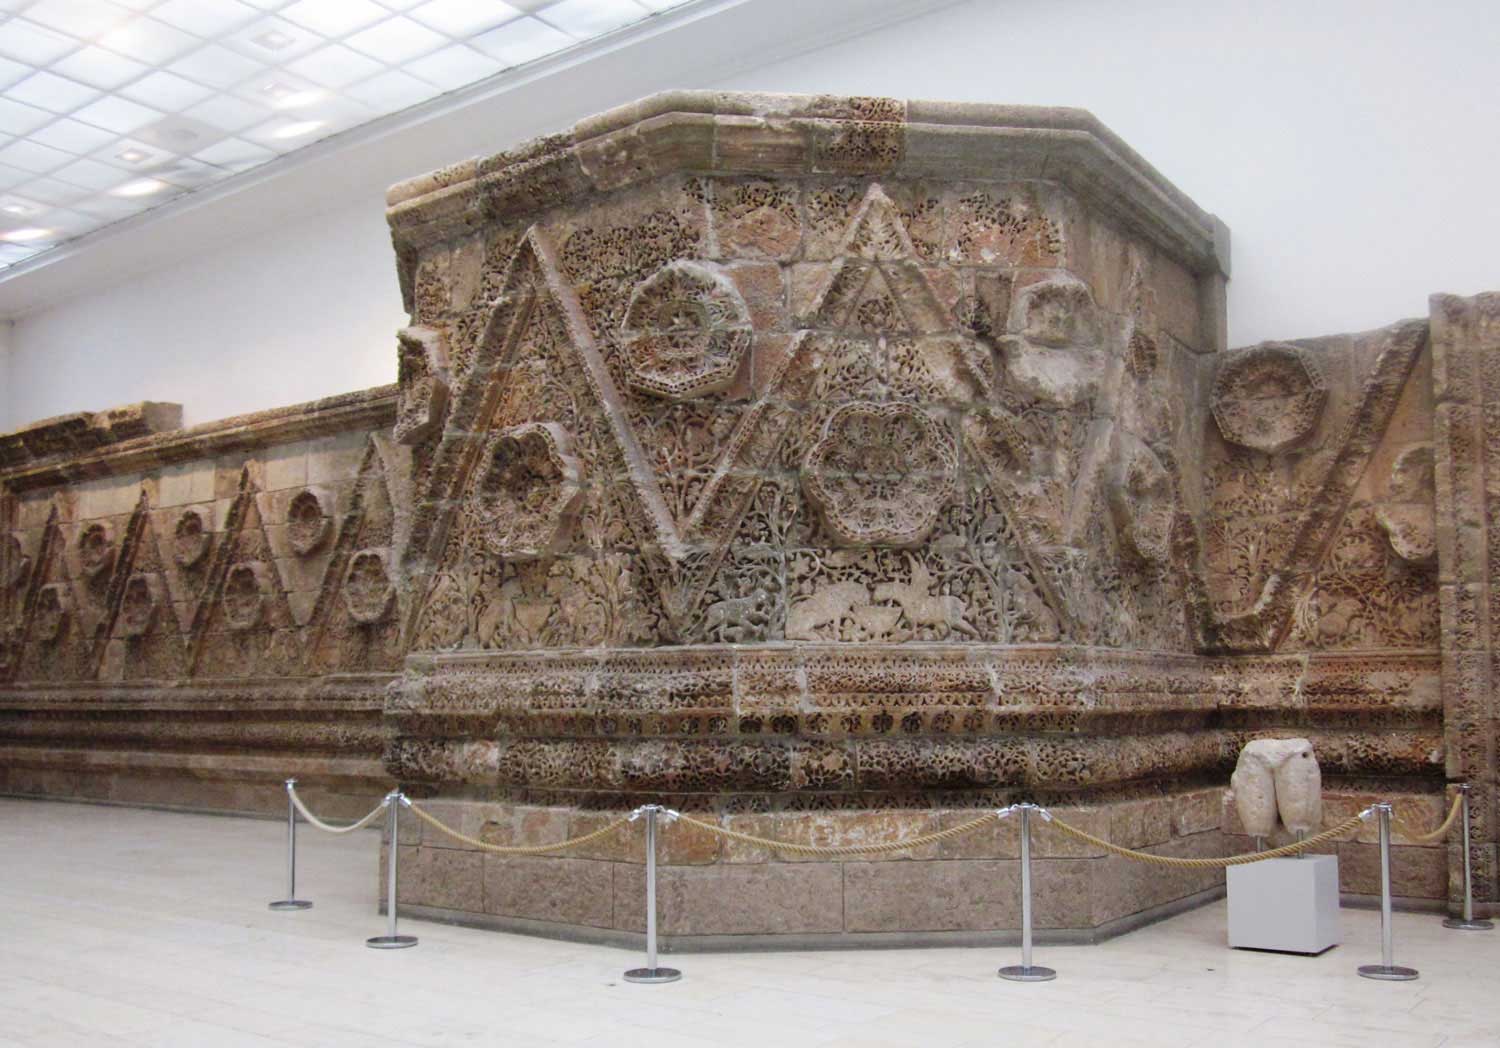 Pergamonmuseum - General view. Palace façade at Pergamon Museum, Berlin, Germany